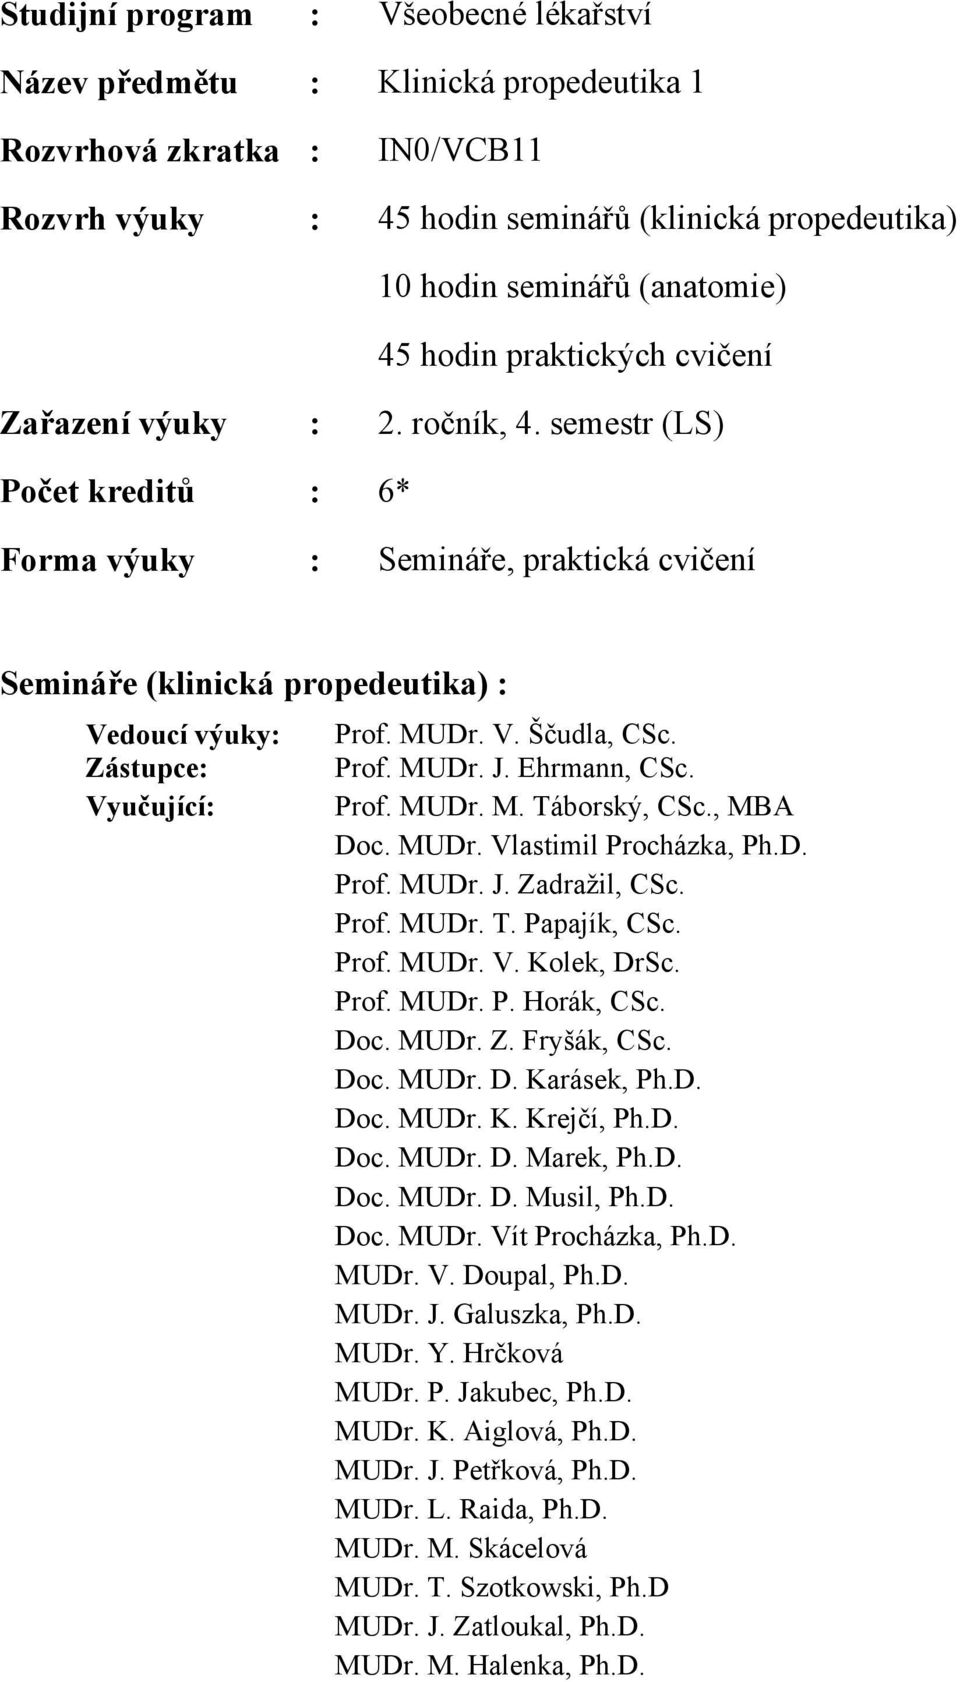 Zástupce: Prof. MUDr. J. Ehrmann, CSc. Vyučující: Prof. MUDr. M. Táborský, CSc., MBA Doc. MUDr. Vlastimil Procházka, Ph.D. Prof. MUDr. J. Zadražil, CSc. Prof. MUDr. T. Papajík, CSc. Prof. MUDr. V. Kolek, DrSc.